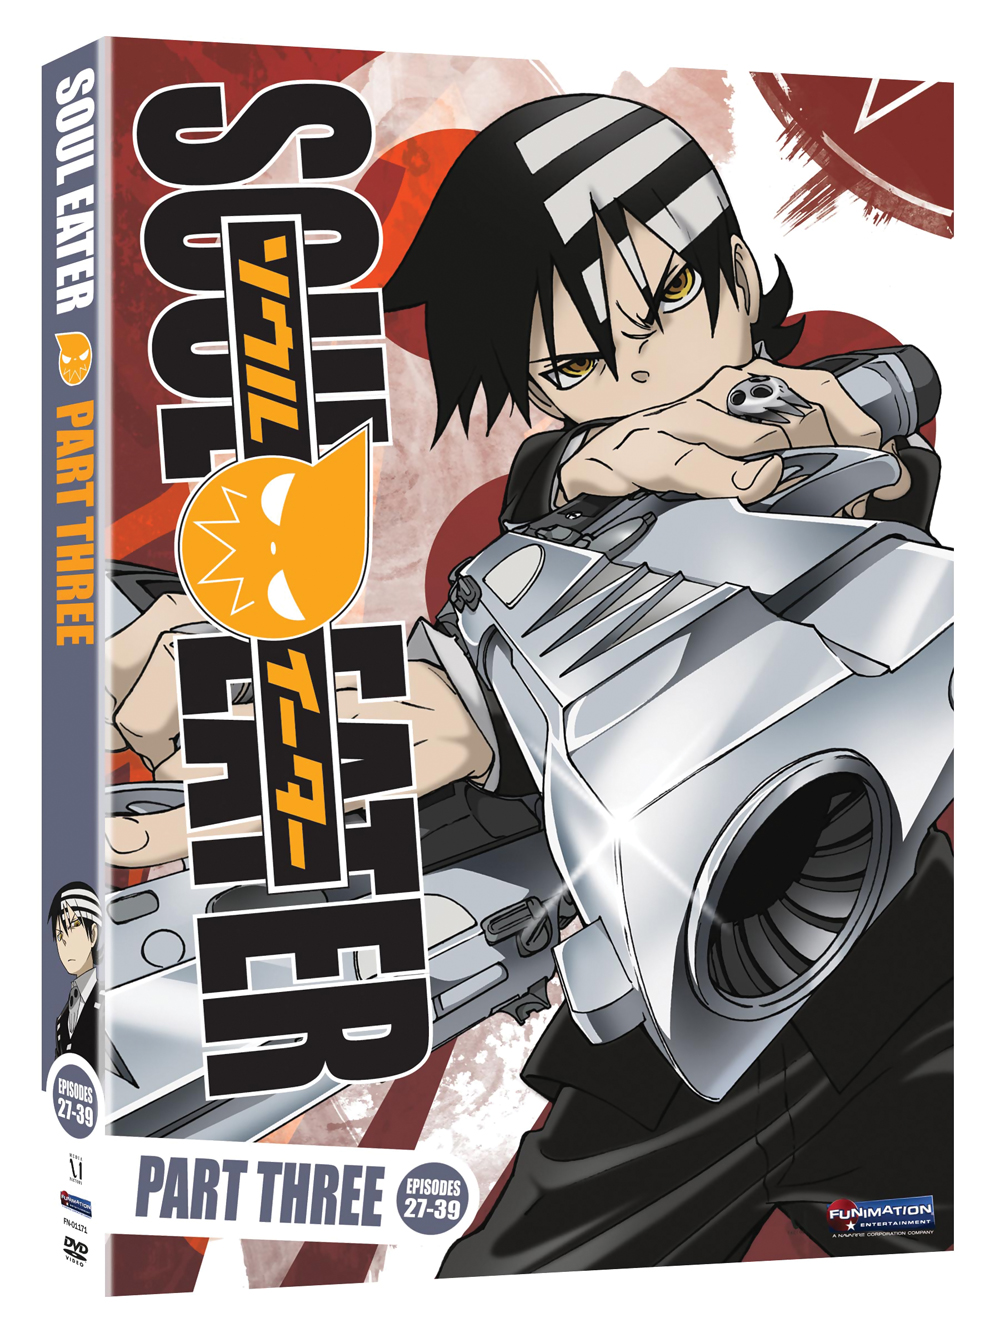 Soul Eater [Anime DVD Cover 1/3] by AnimeDVDCovers on DeviantArt